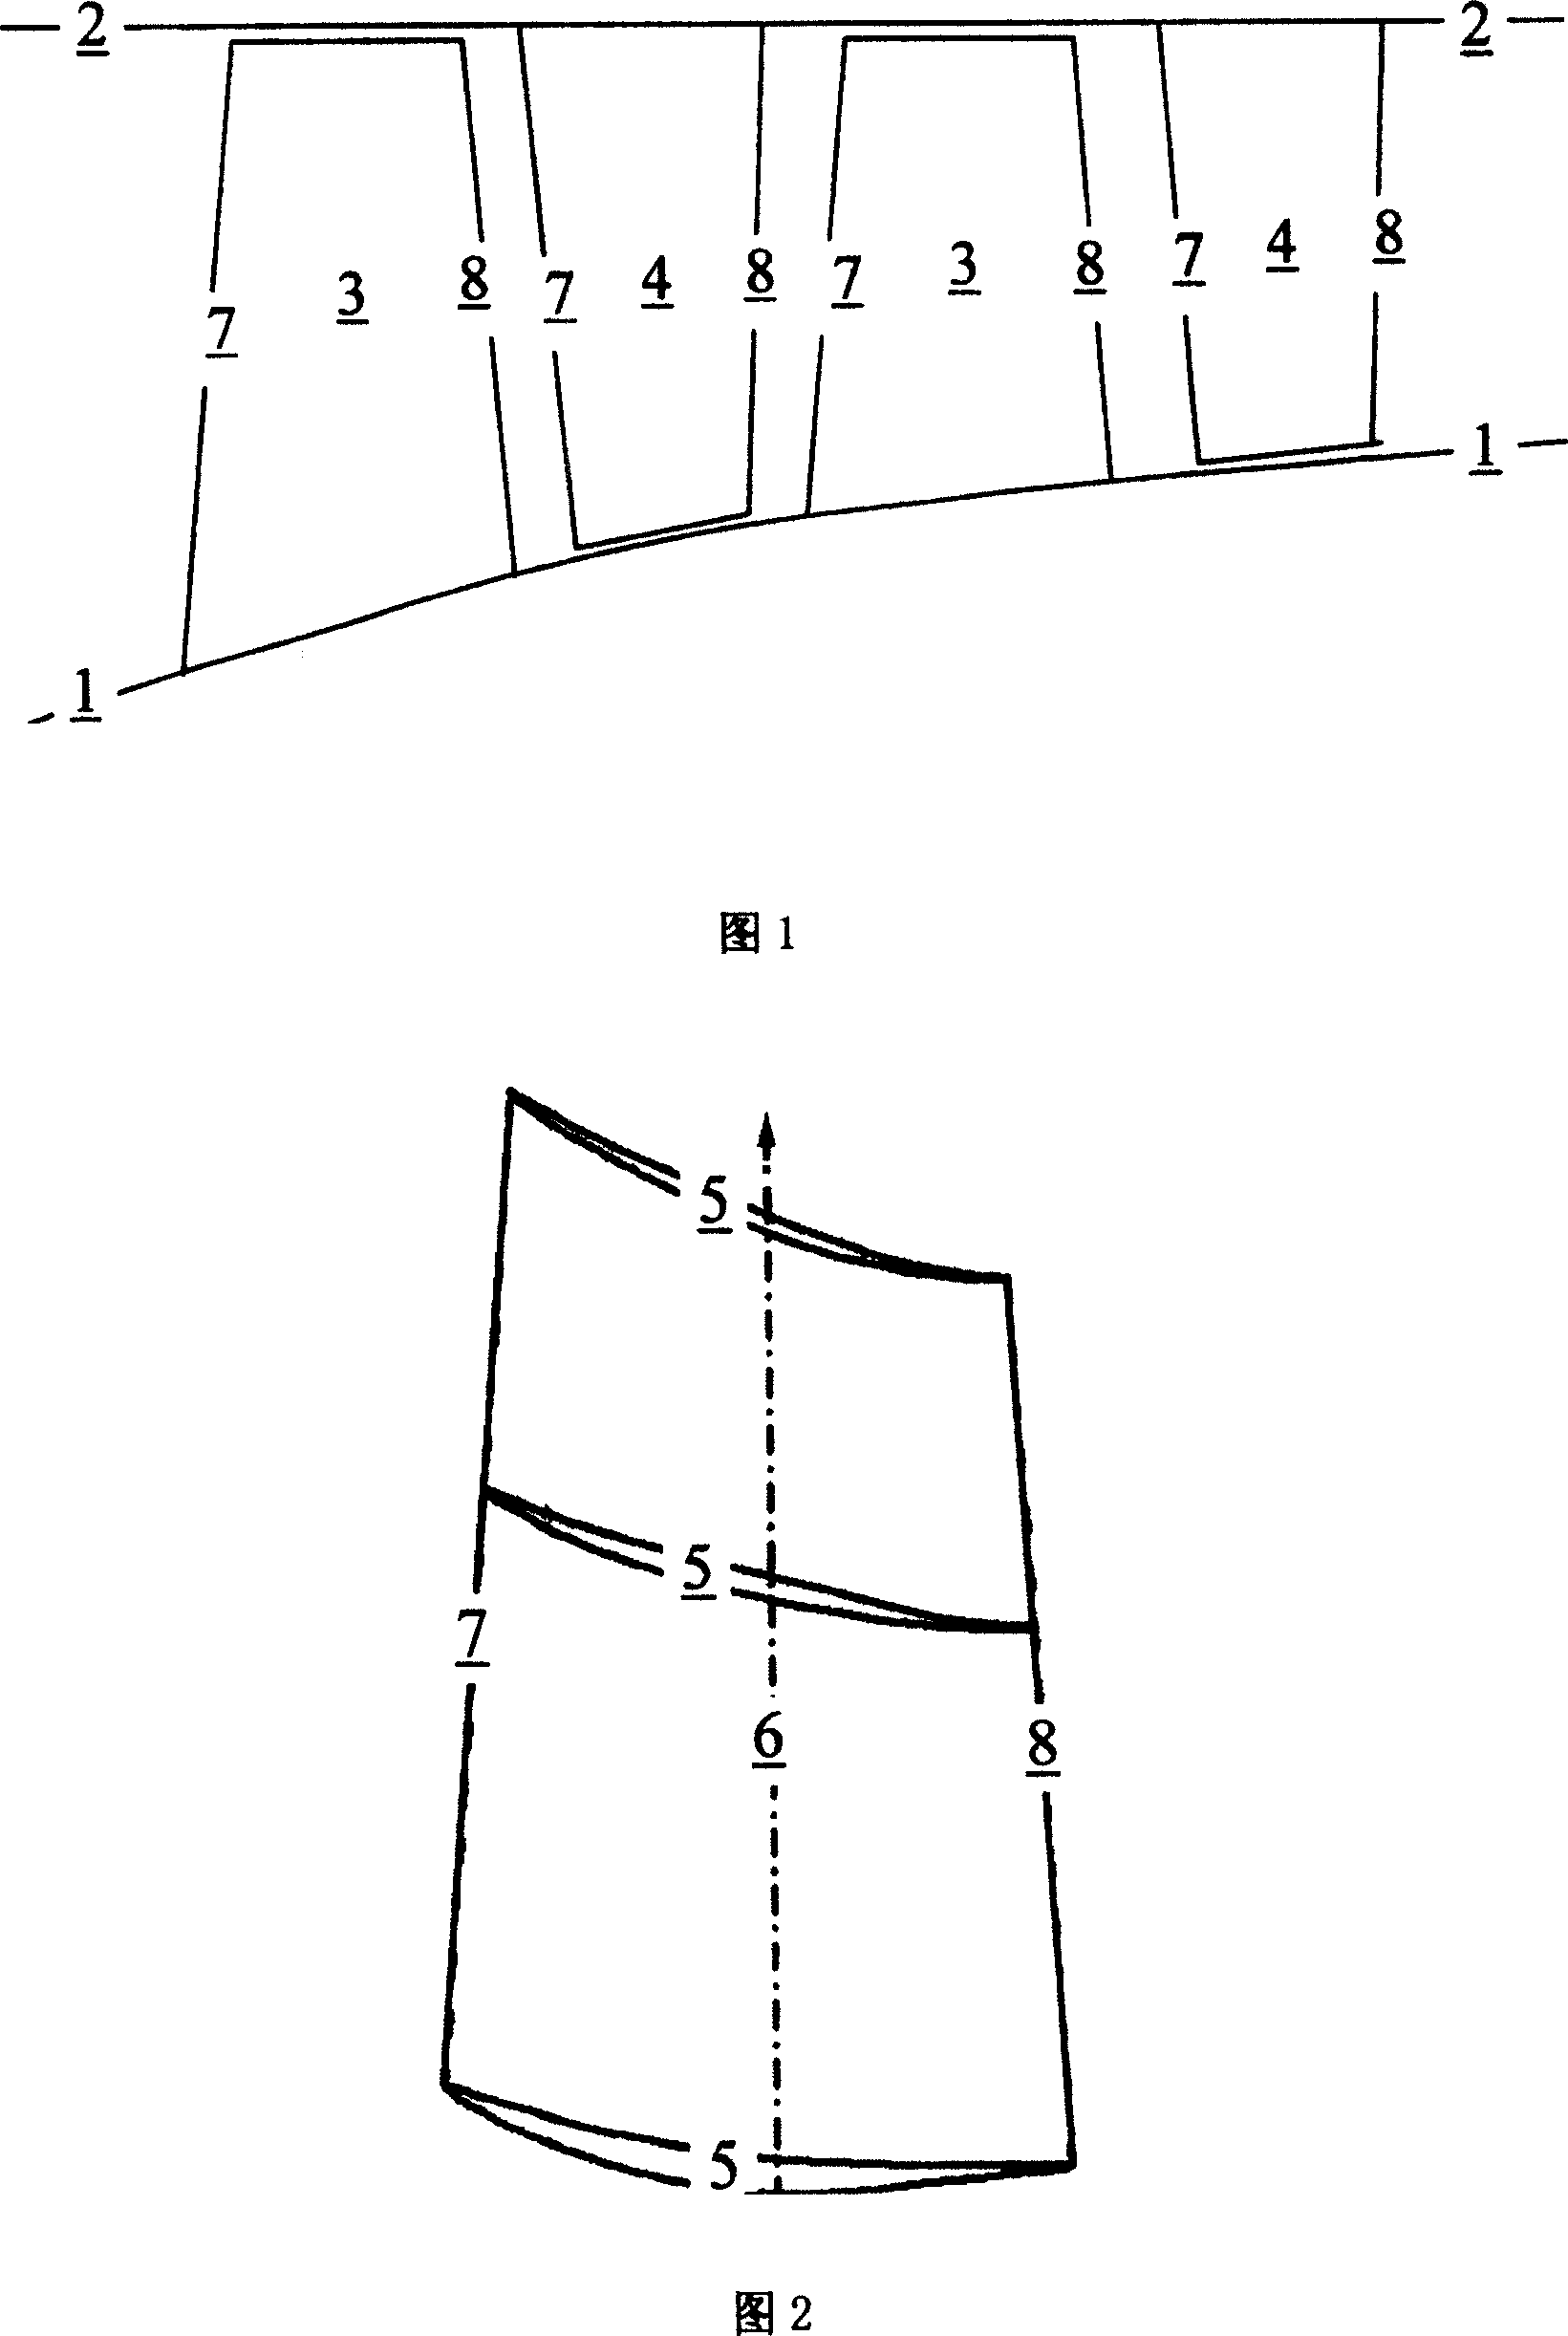 Method for deciding margin of single line blade of axial flow compressor